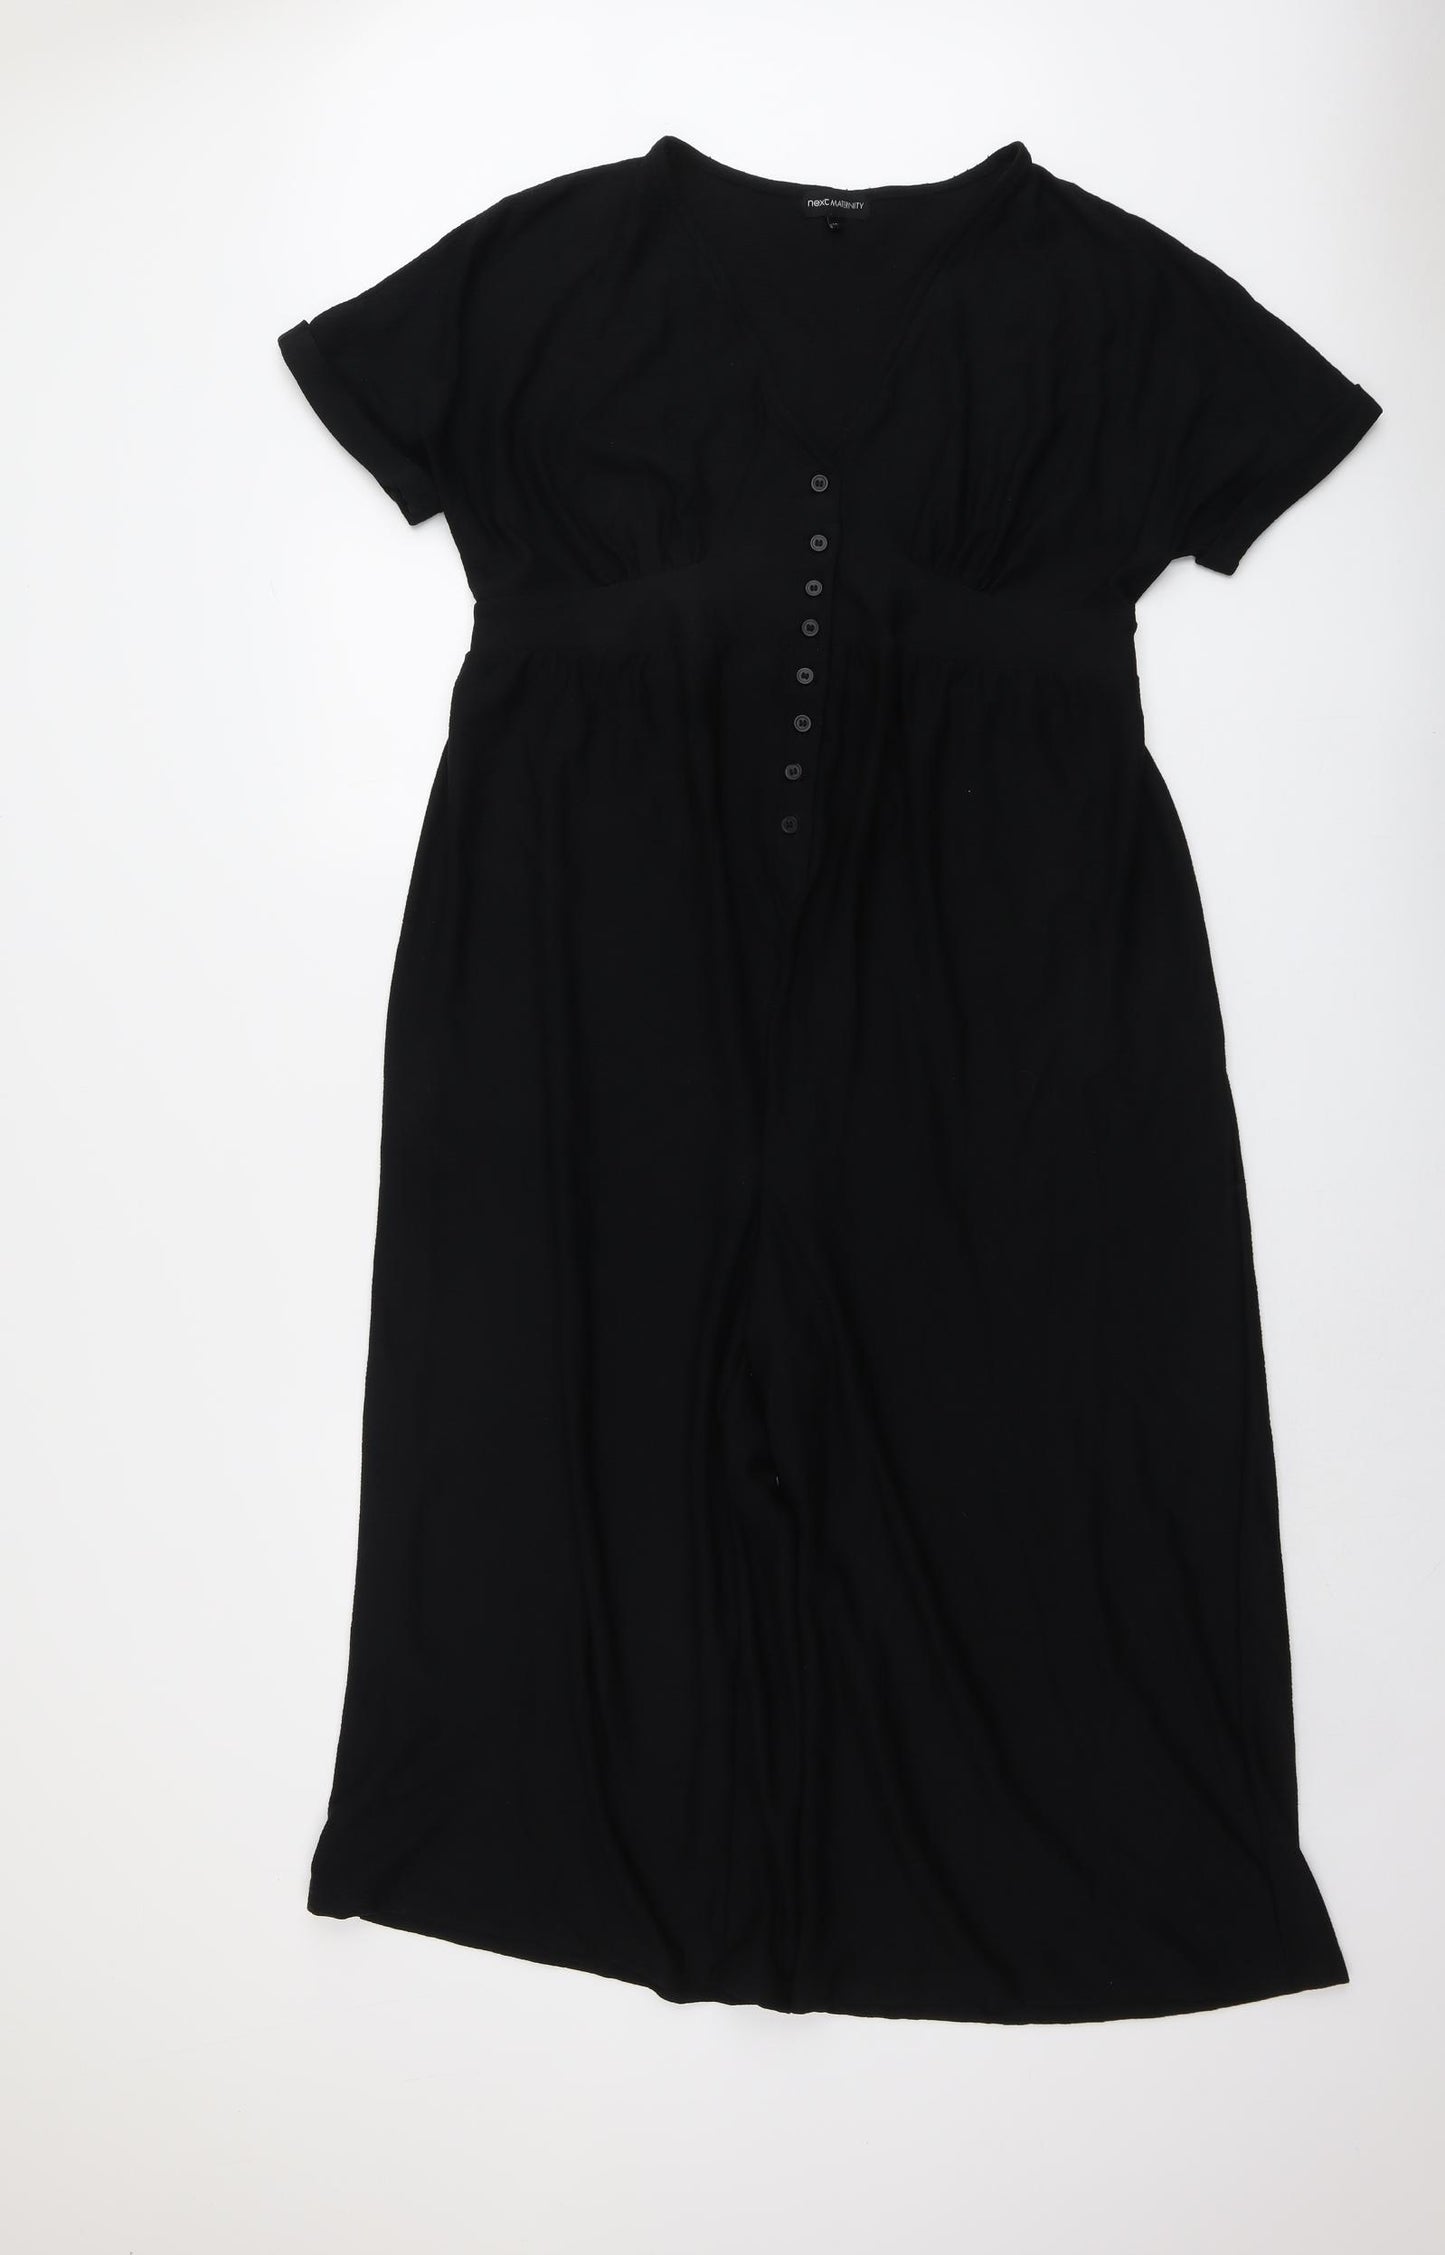 NEXT Womens Black Polyester Jumpsuit One-Piece Size 12 Button